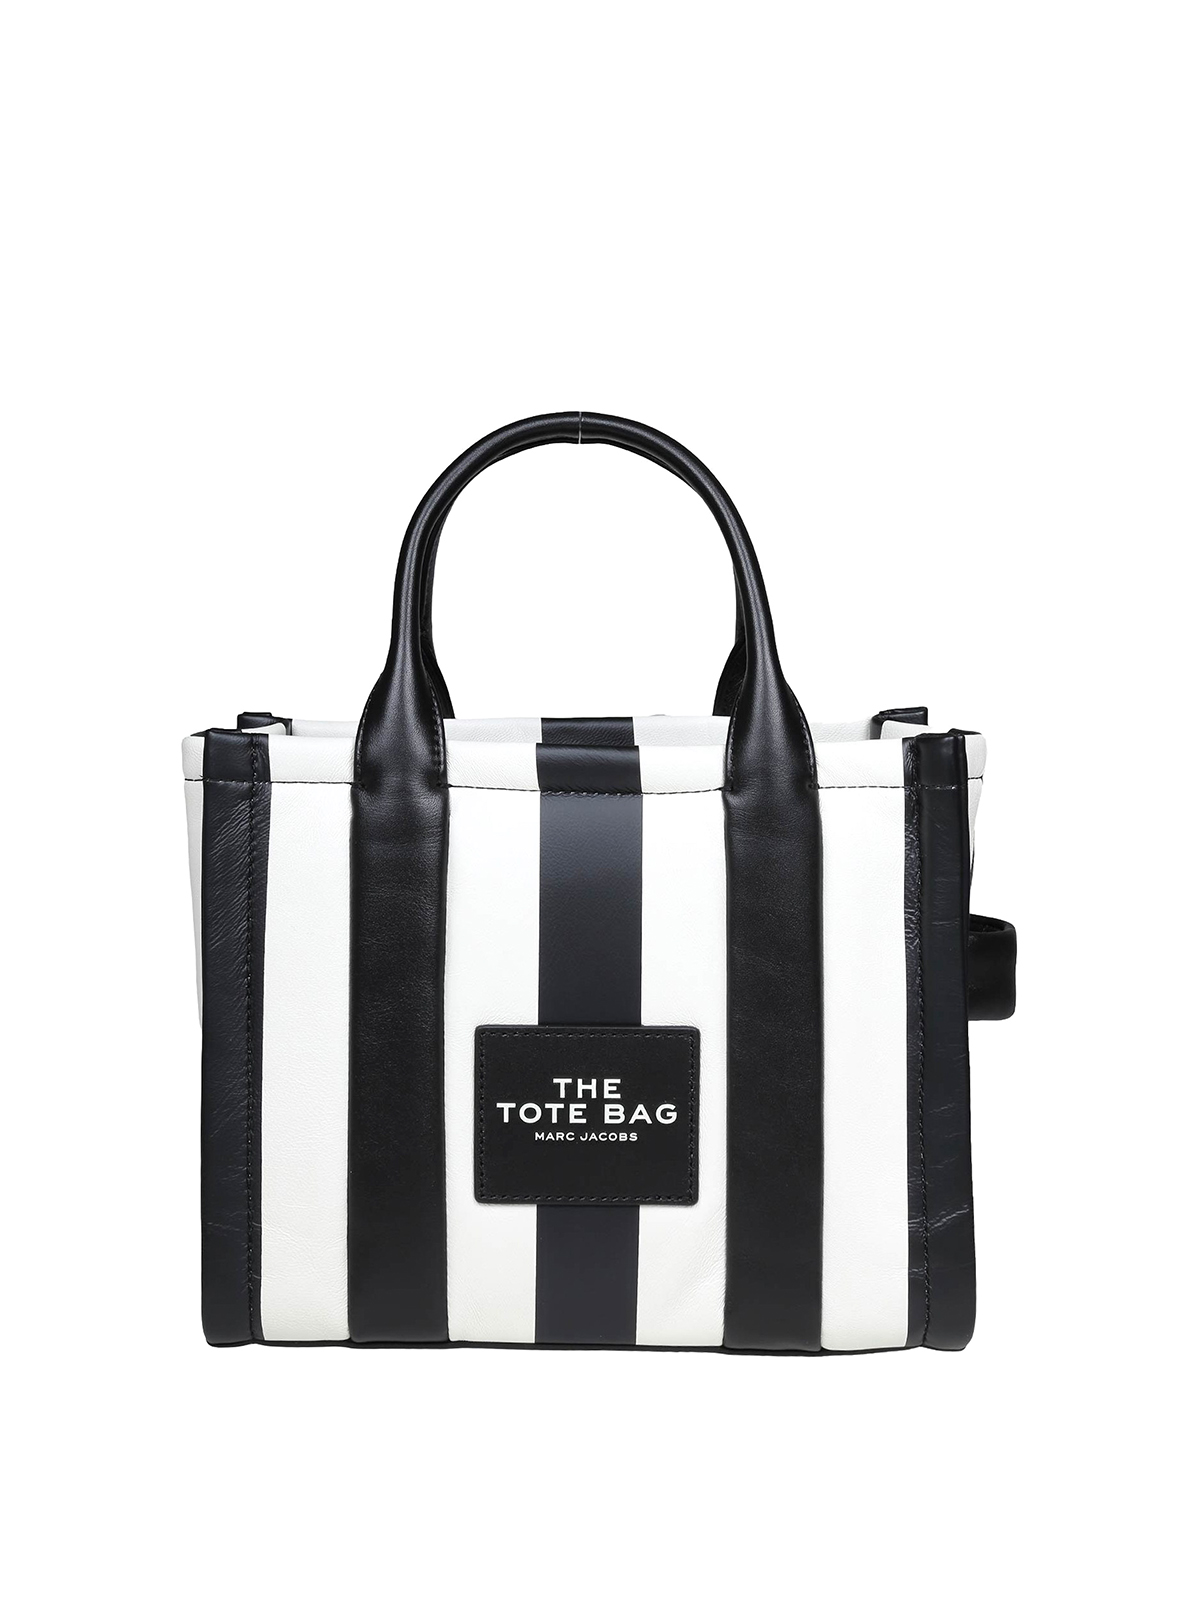 Marc Jacobs The Monogram Leather Mini Tote Bag Black/White